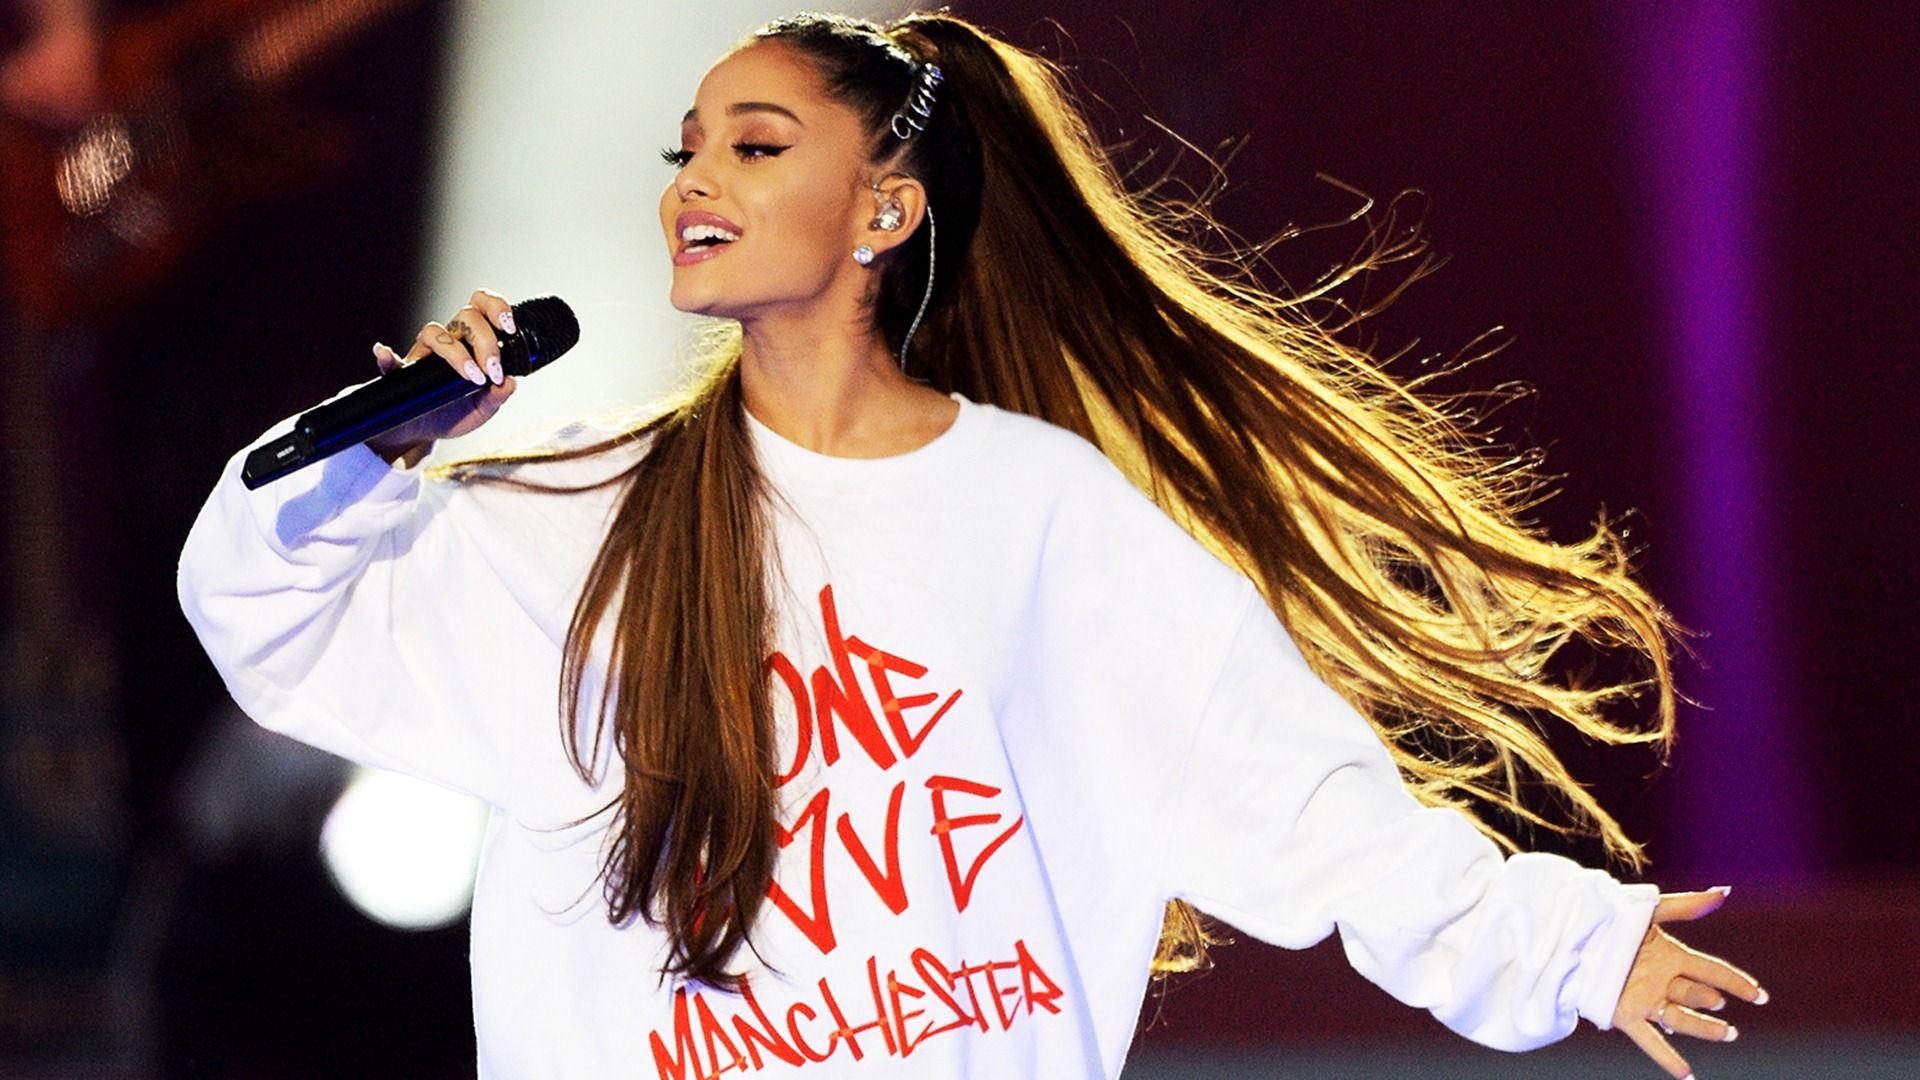 Ariana Grande Background Wallpaper Grande One Love Manchester Wallpaper & Background Download